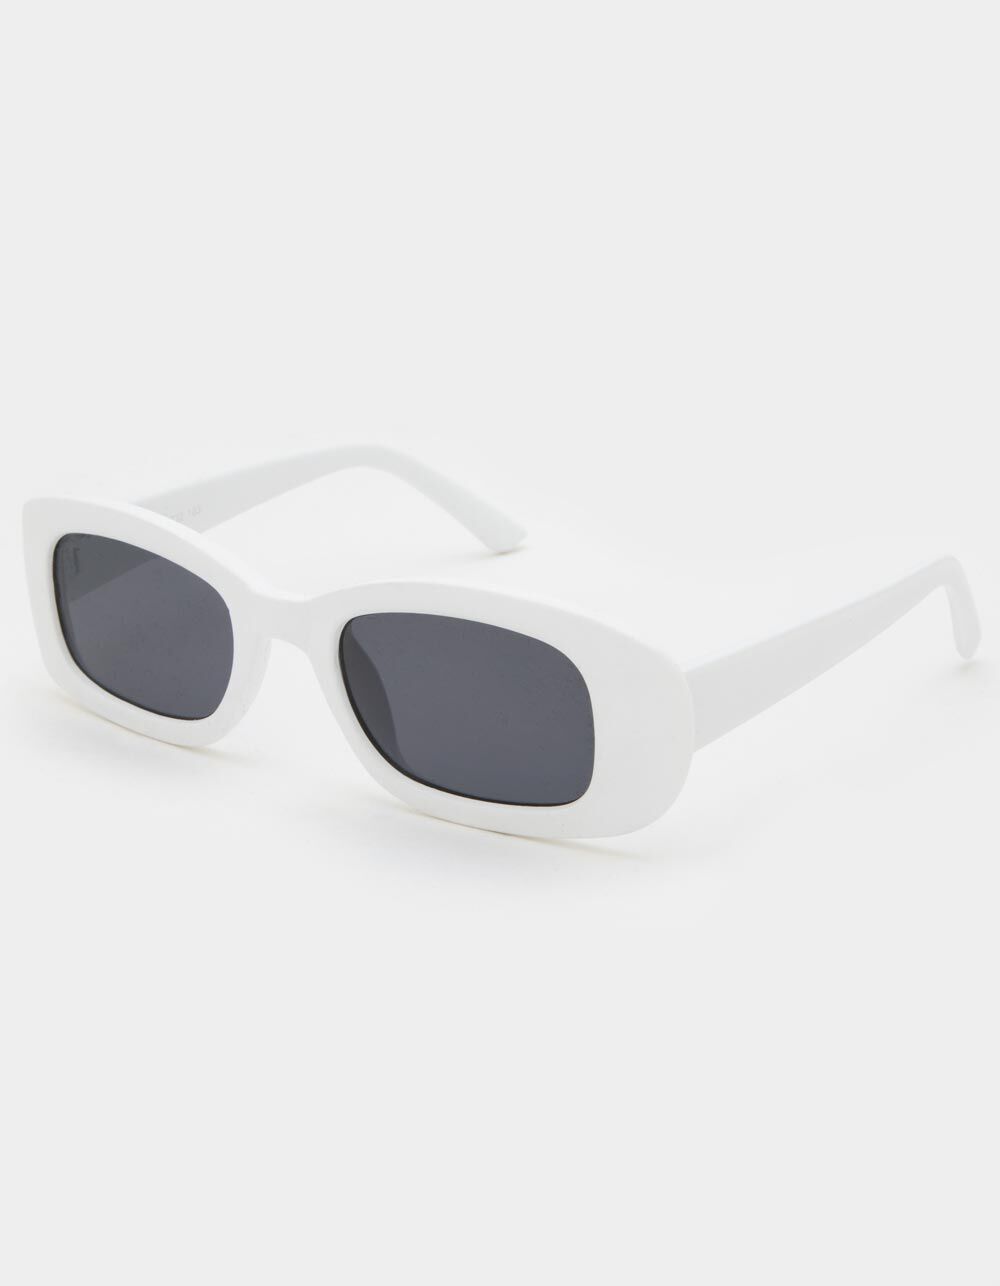 TILLYSPlastic Rectangle Sunglasses | DailyMail